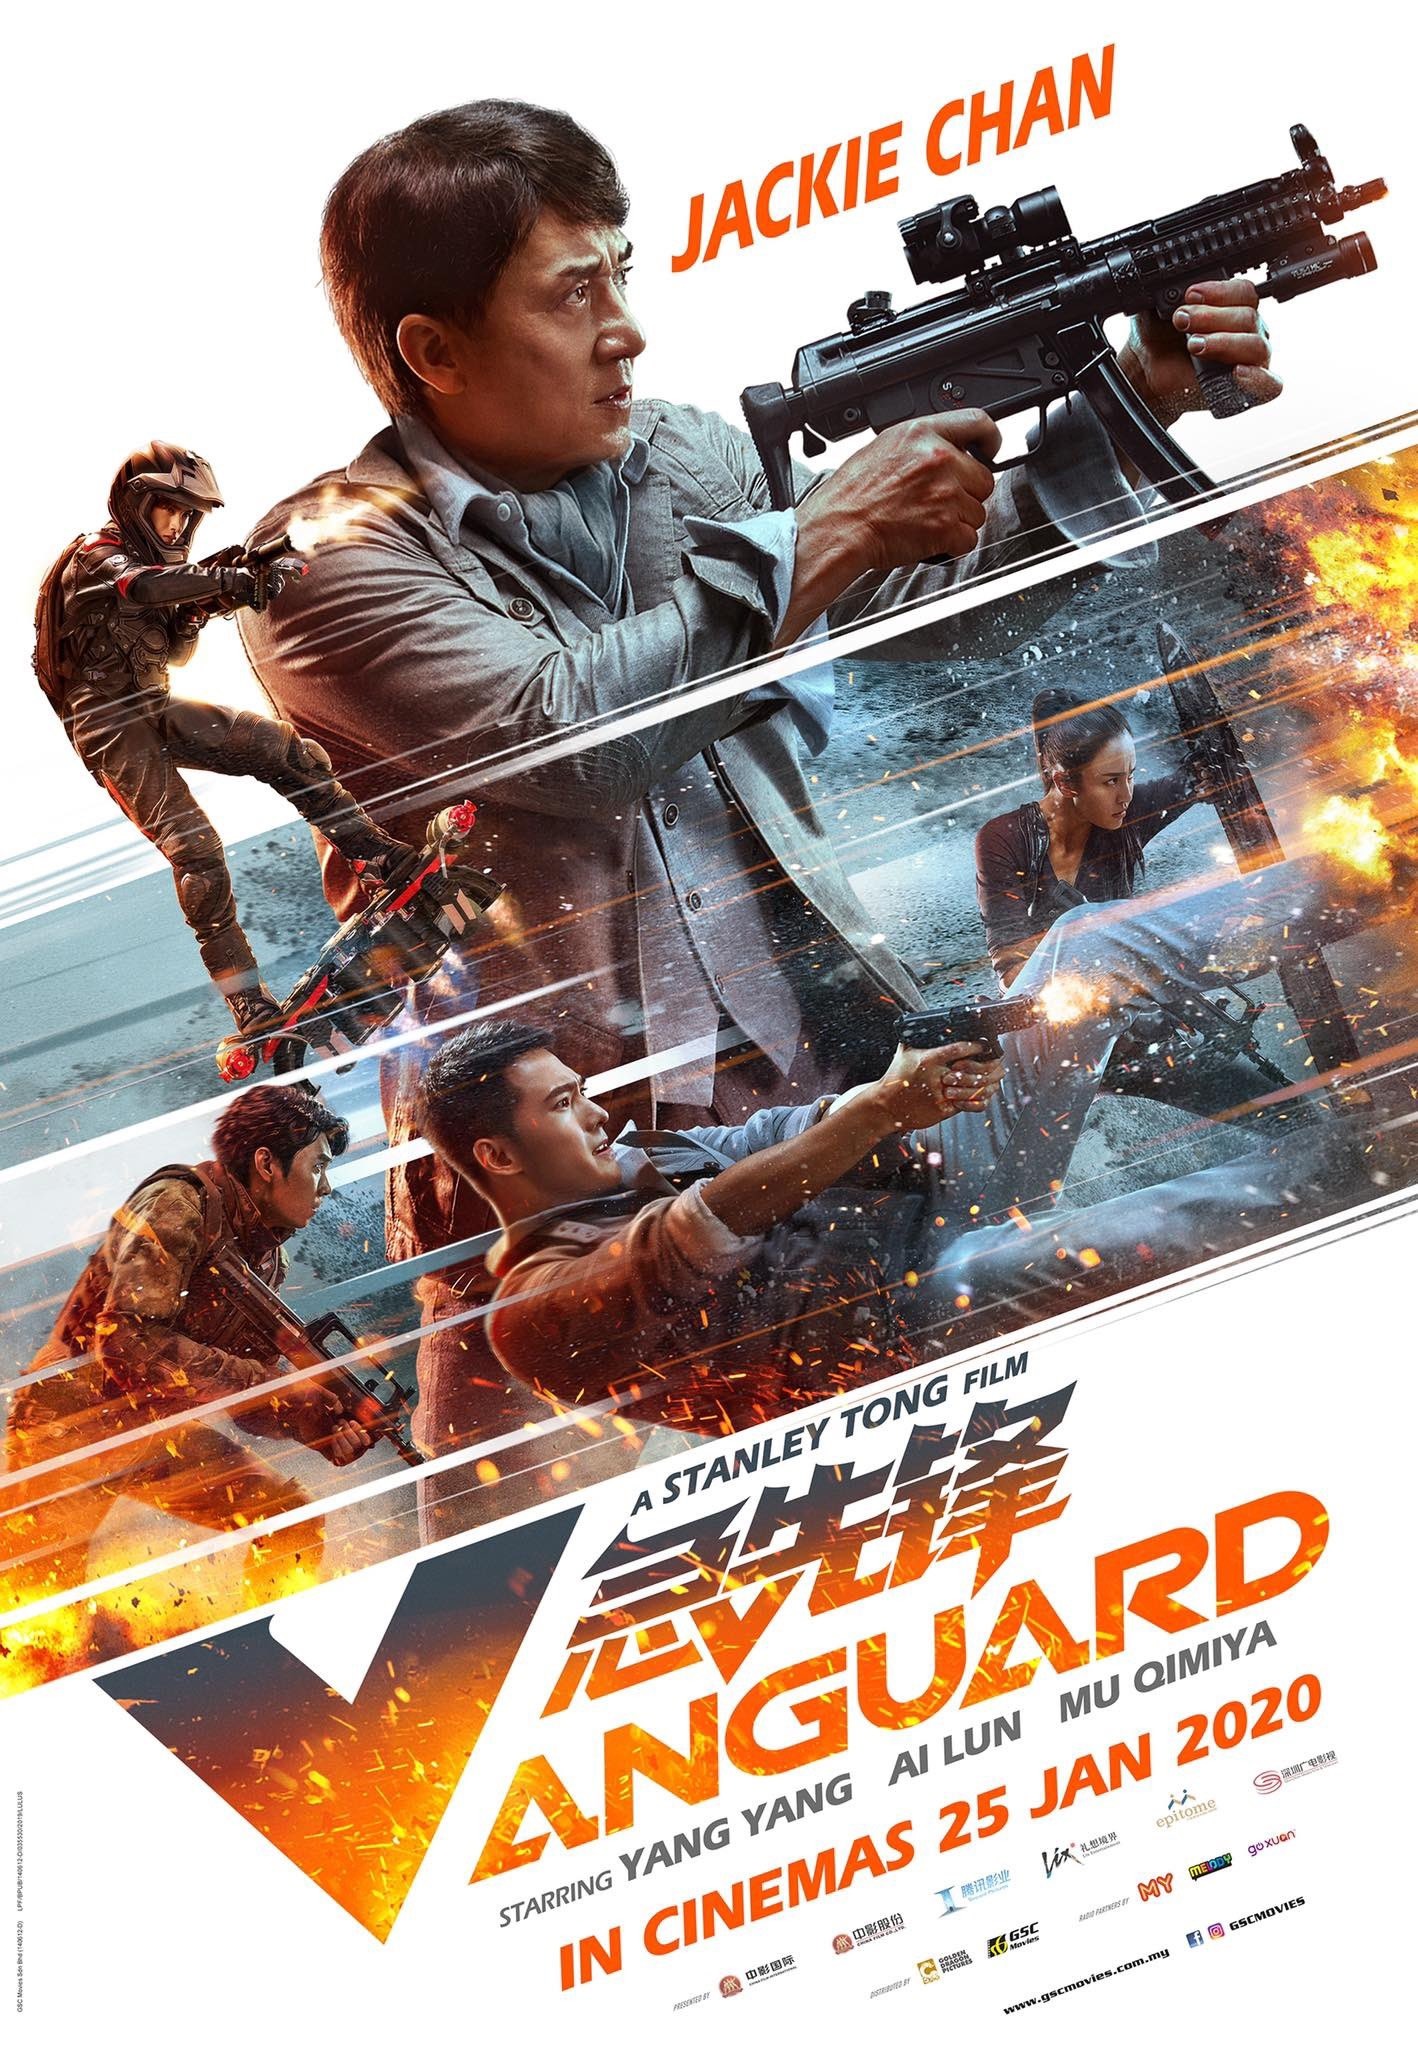 Mega Sized Movie Poster Image for Vanguard (#4 of 6)